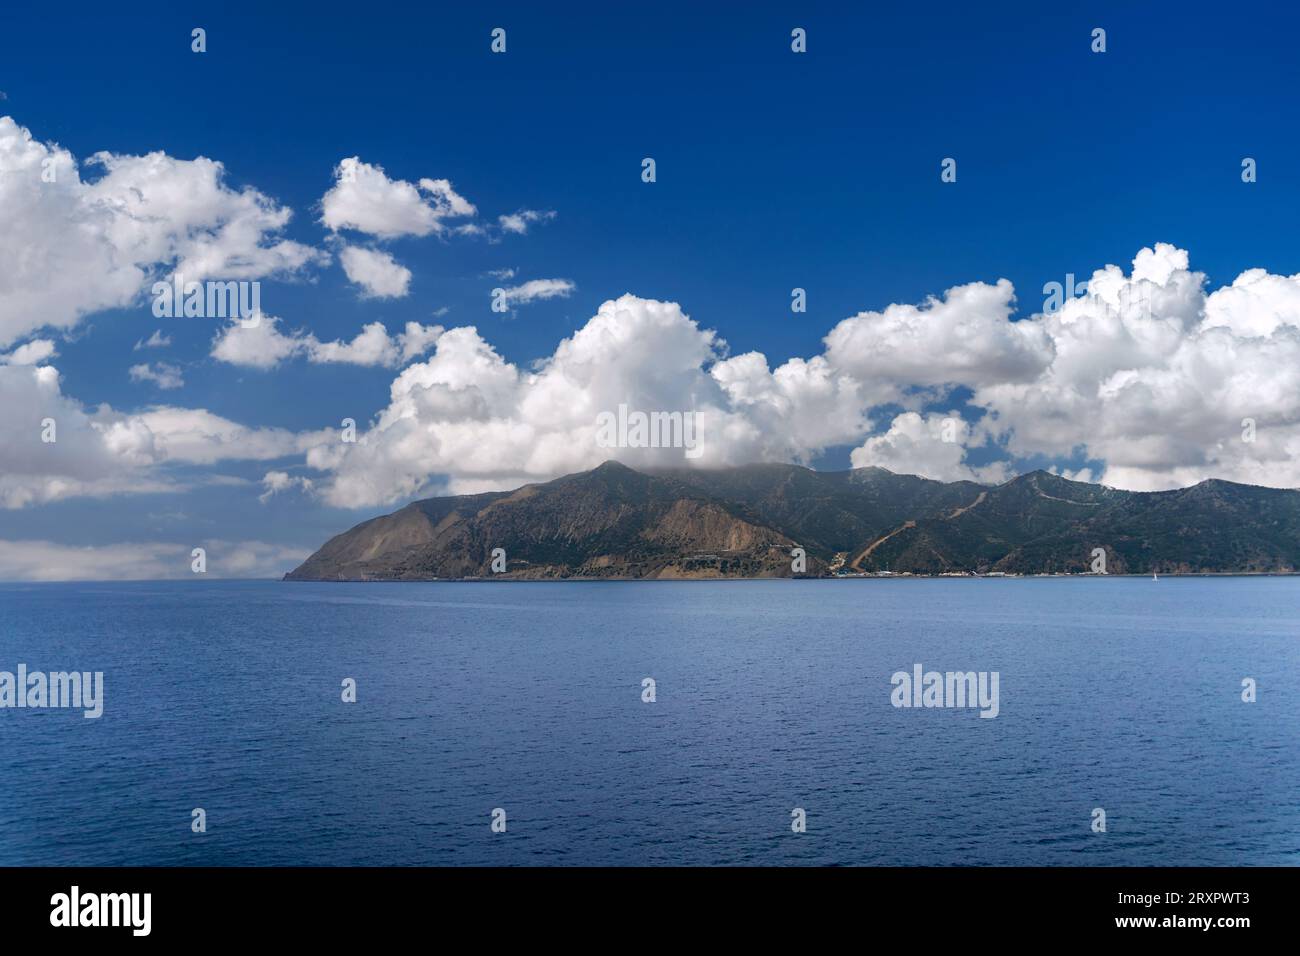 View of Santa Catalina Island off the coast of Southern California Stock Photo